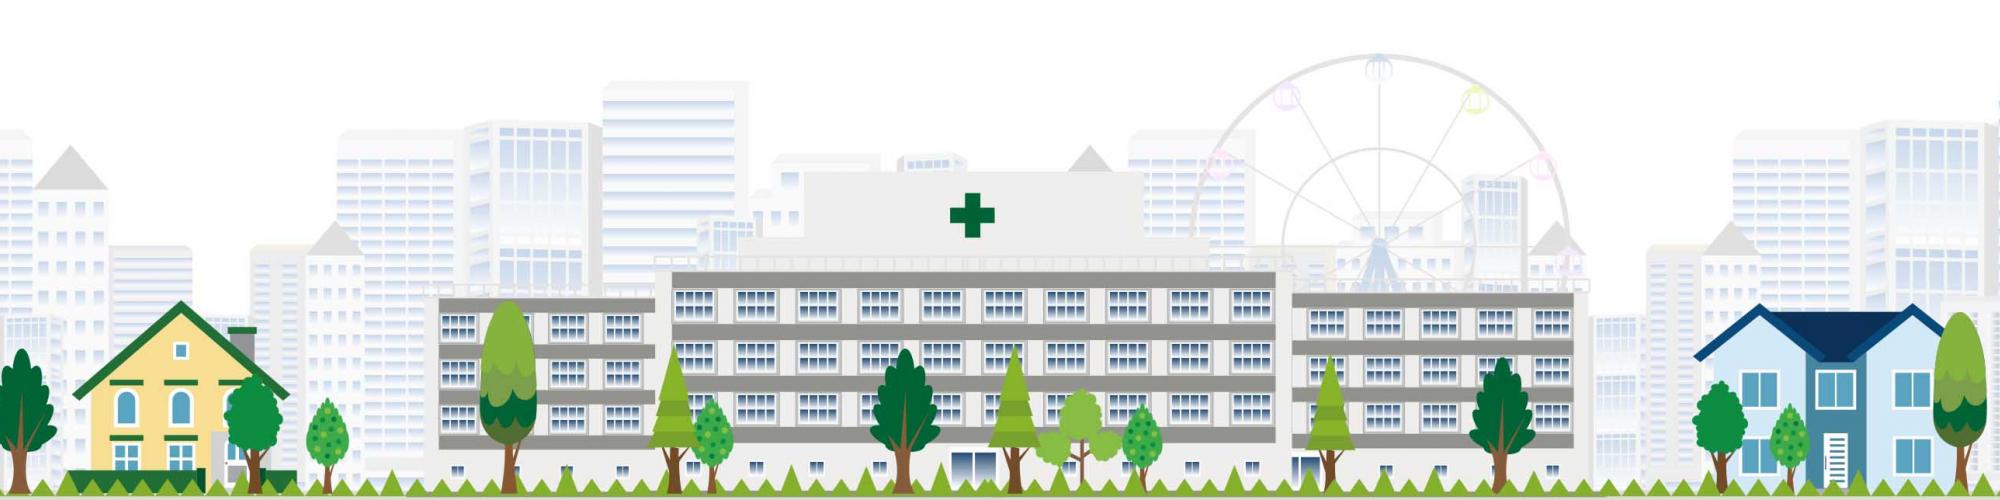 Franziskus Hospital Bielefeld